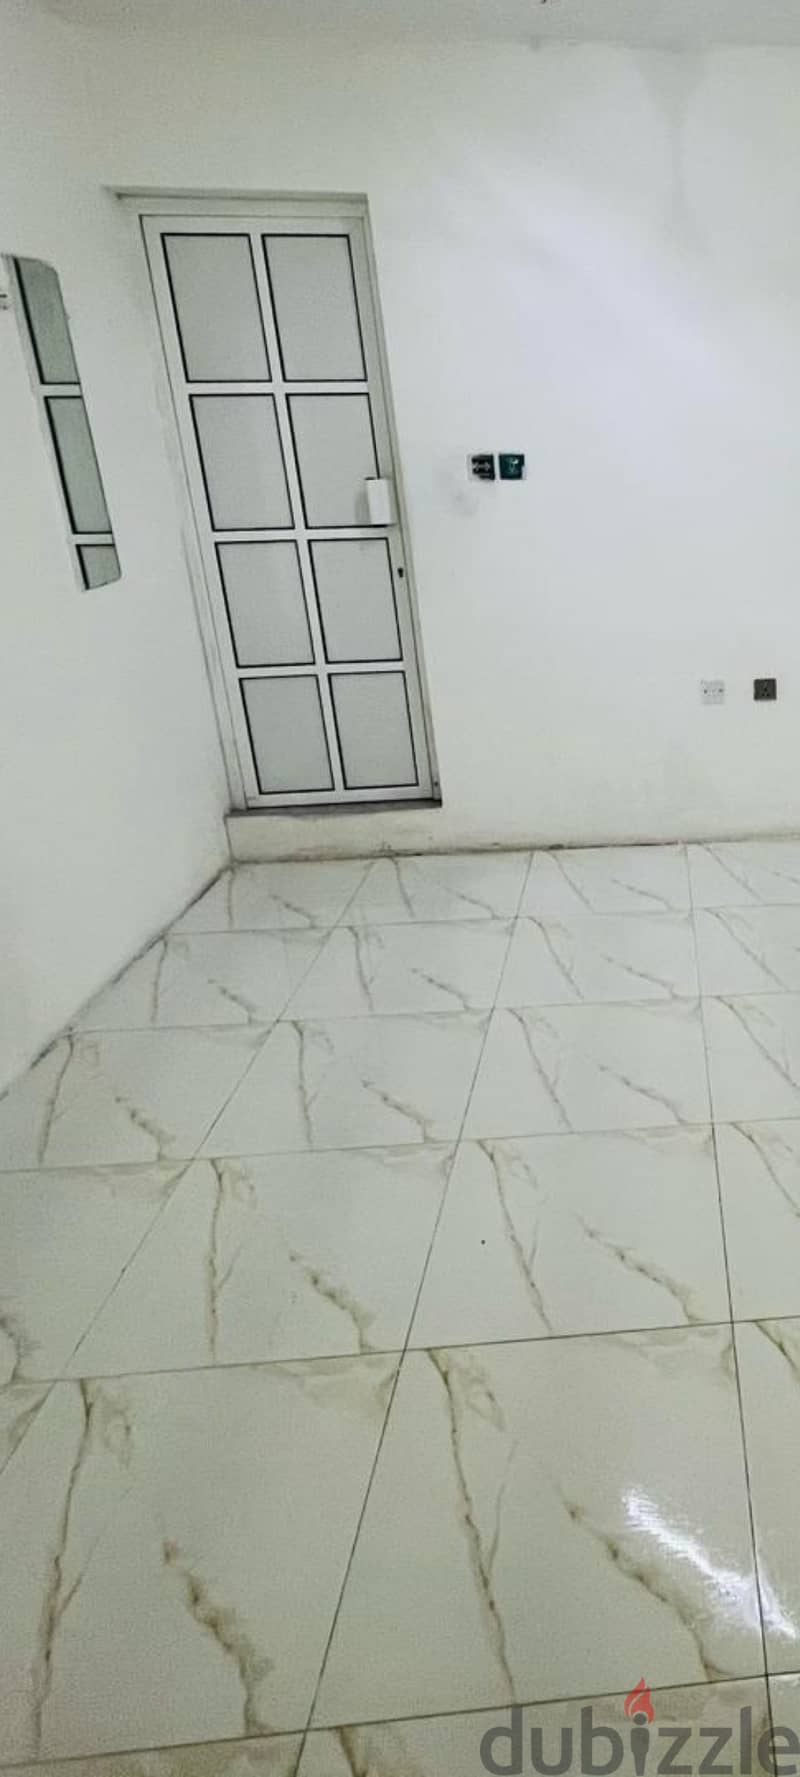 Studio flat for rent in hamala 100bd with ewa 3